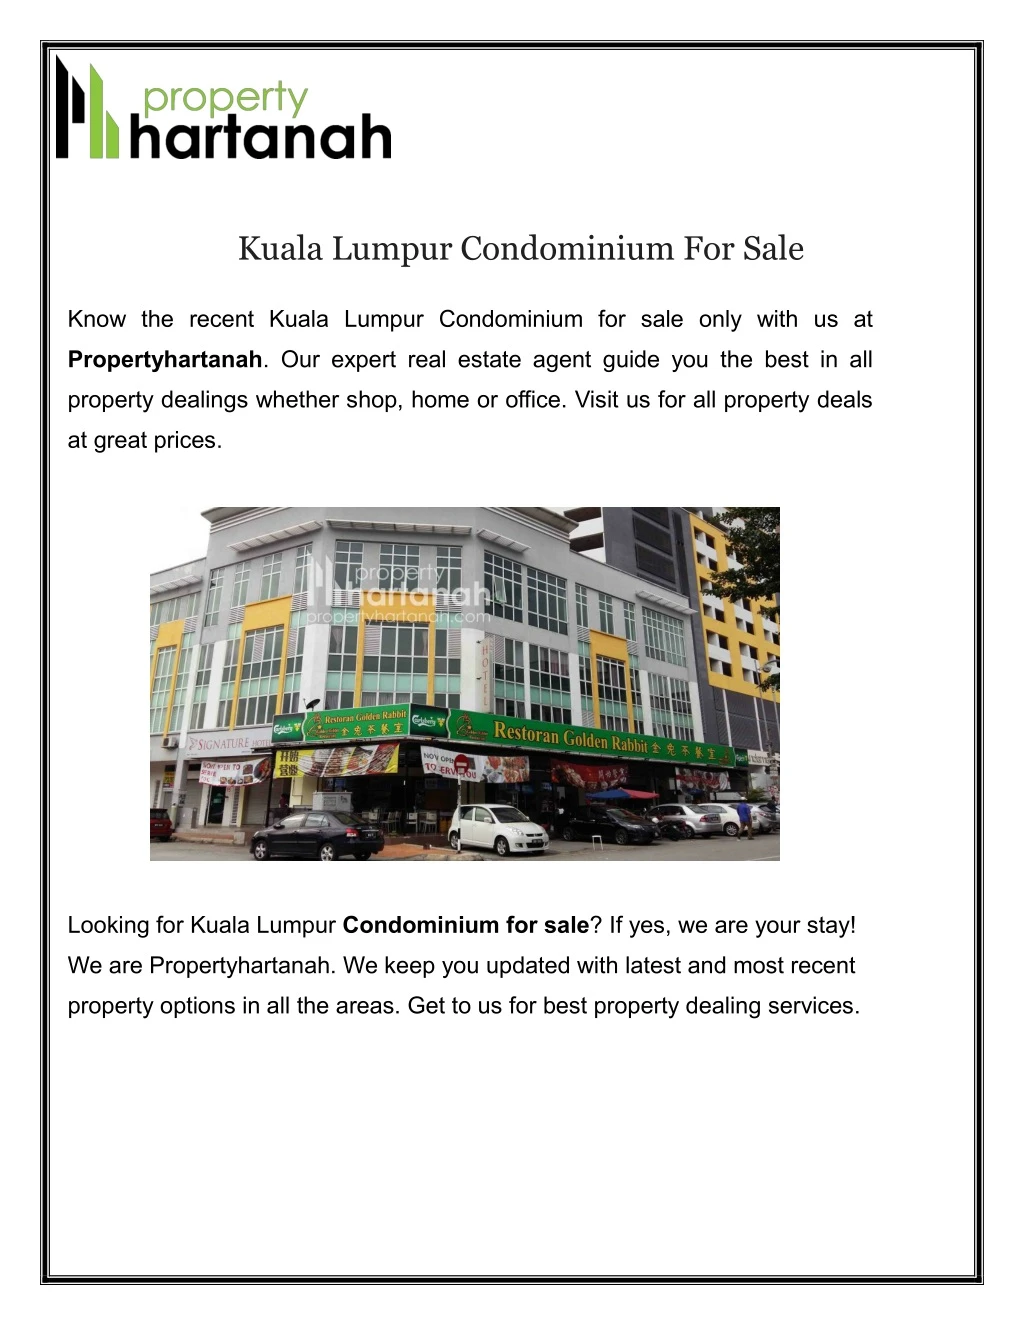 kuala lumpur condominium for sale